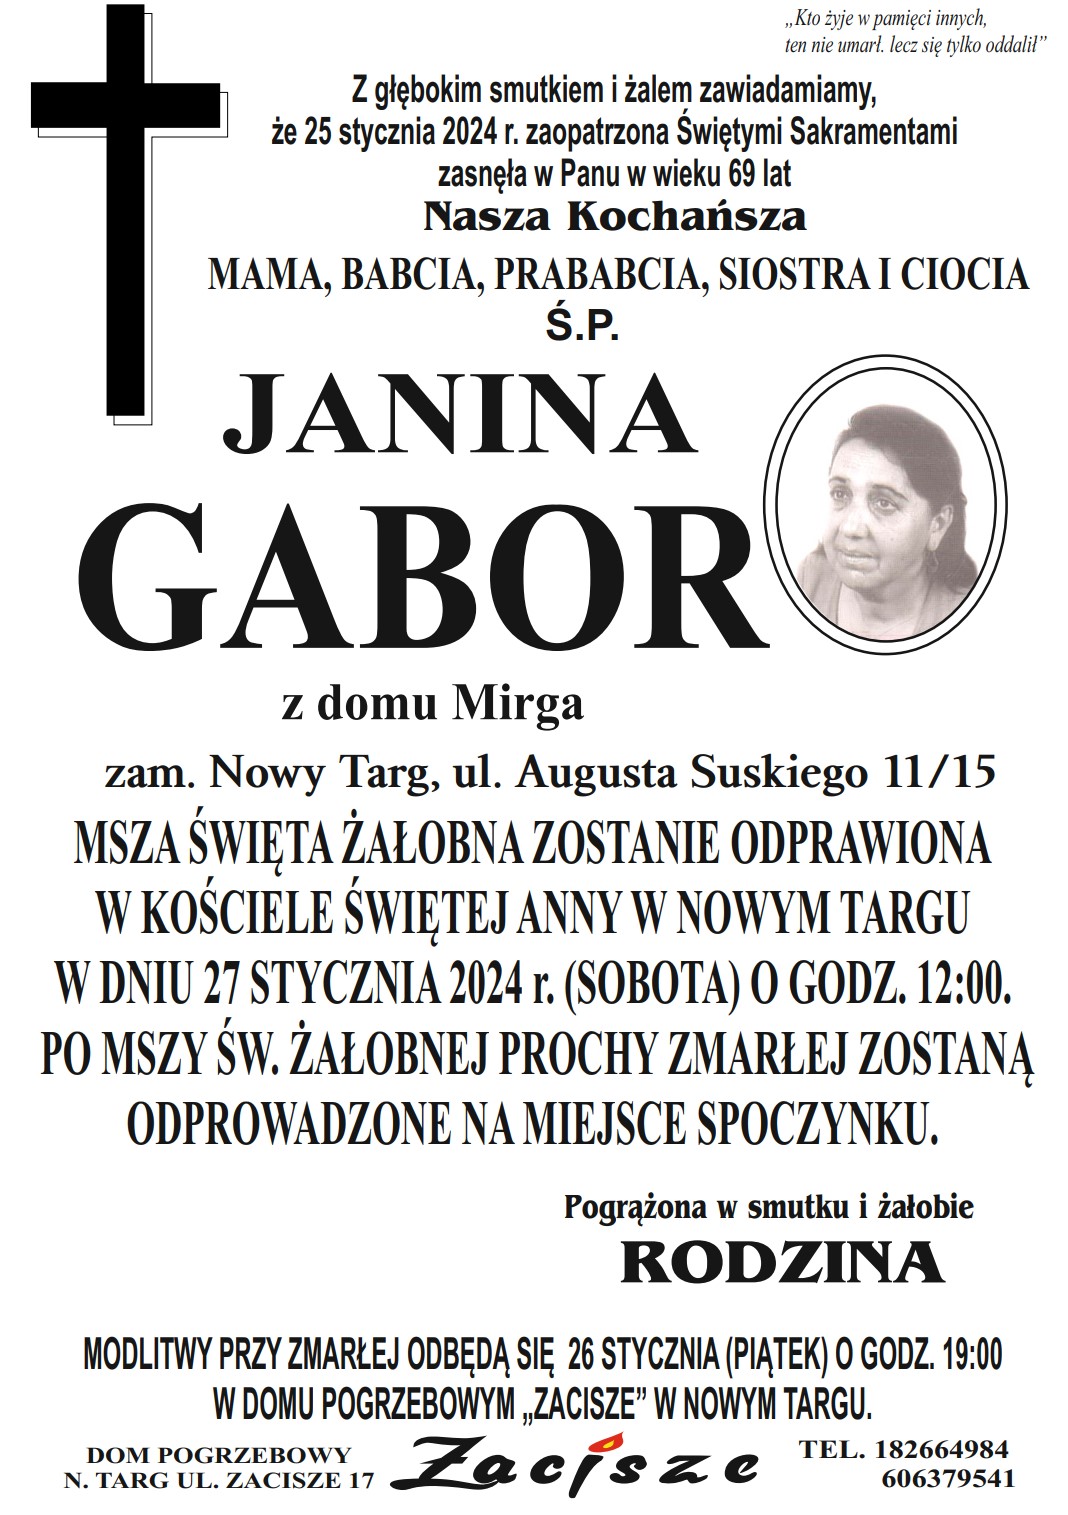 Janina Gabor